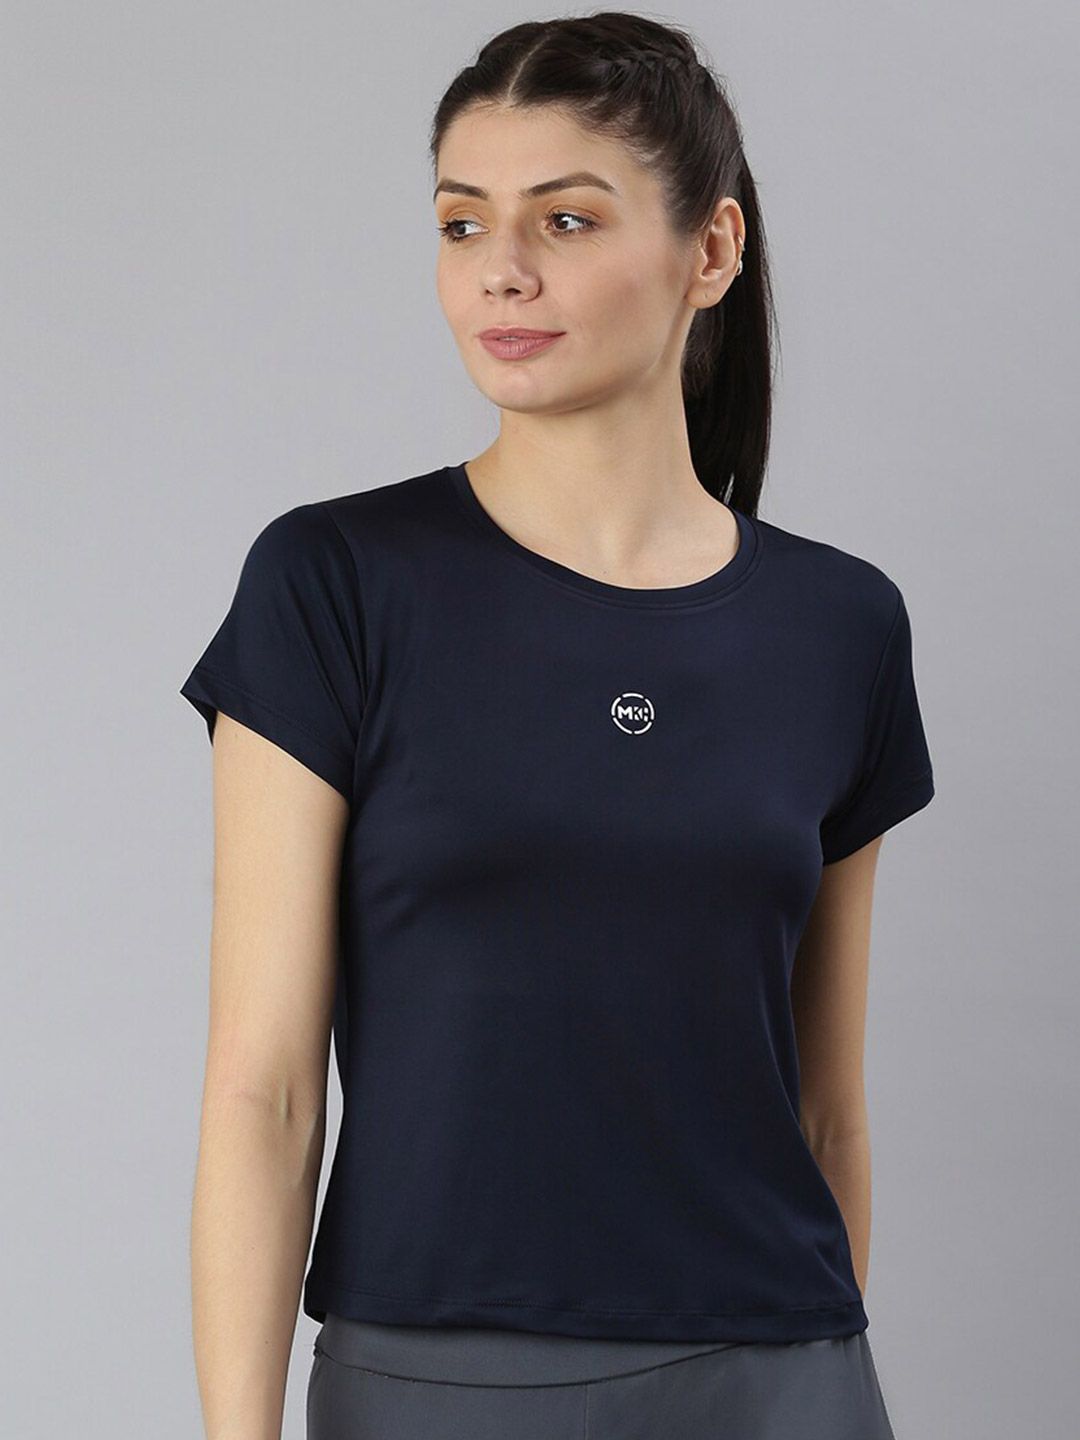 MKH Women Navy Blue Dri-FIT Crop T-shirt Price in India